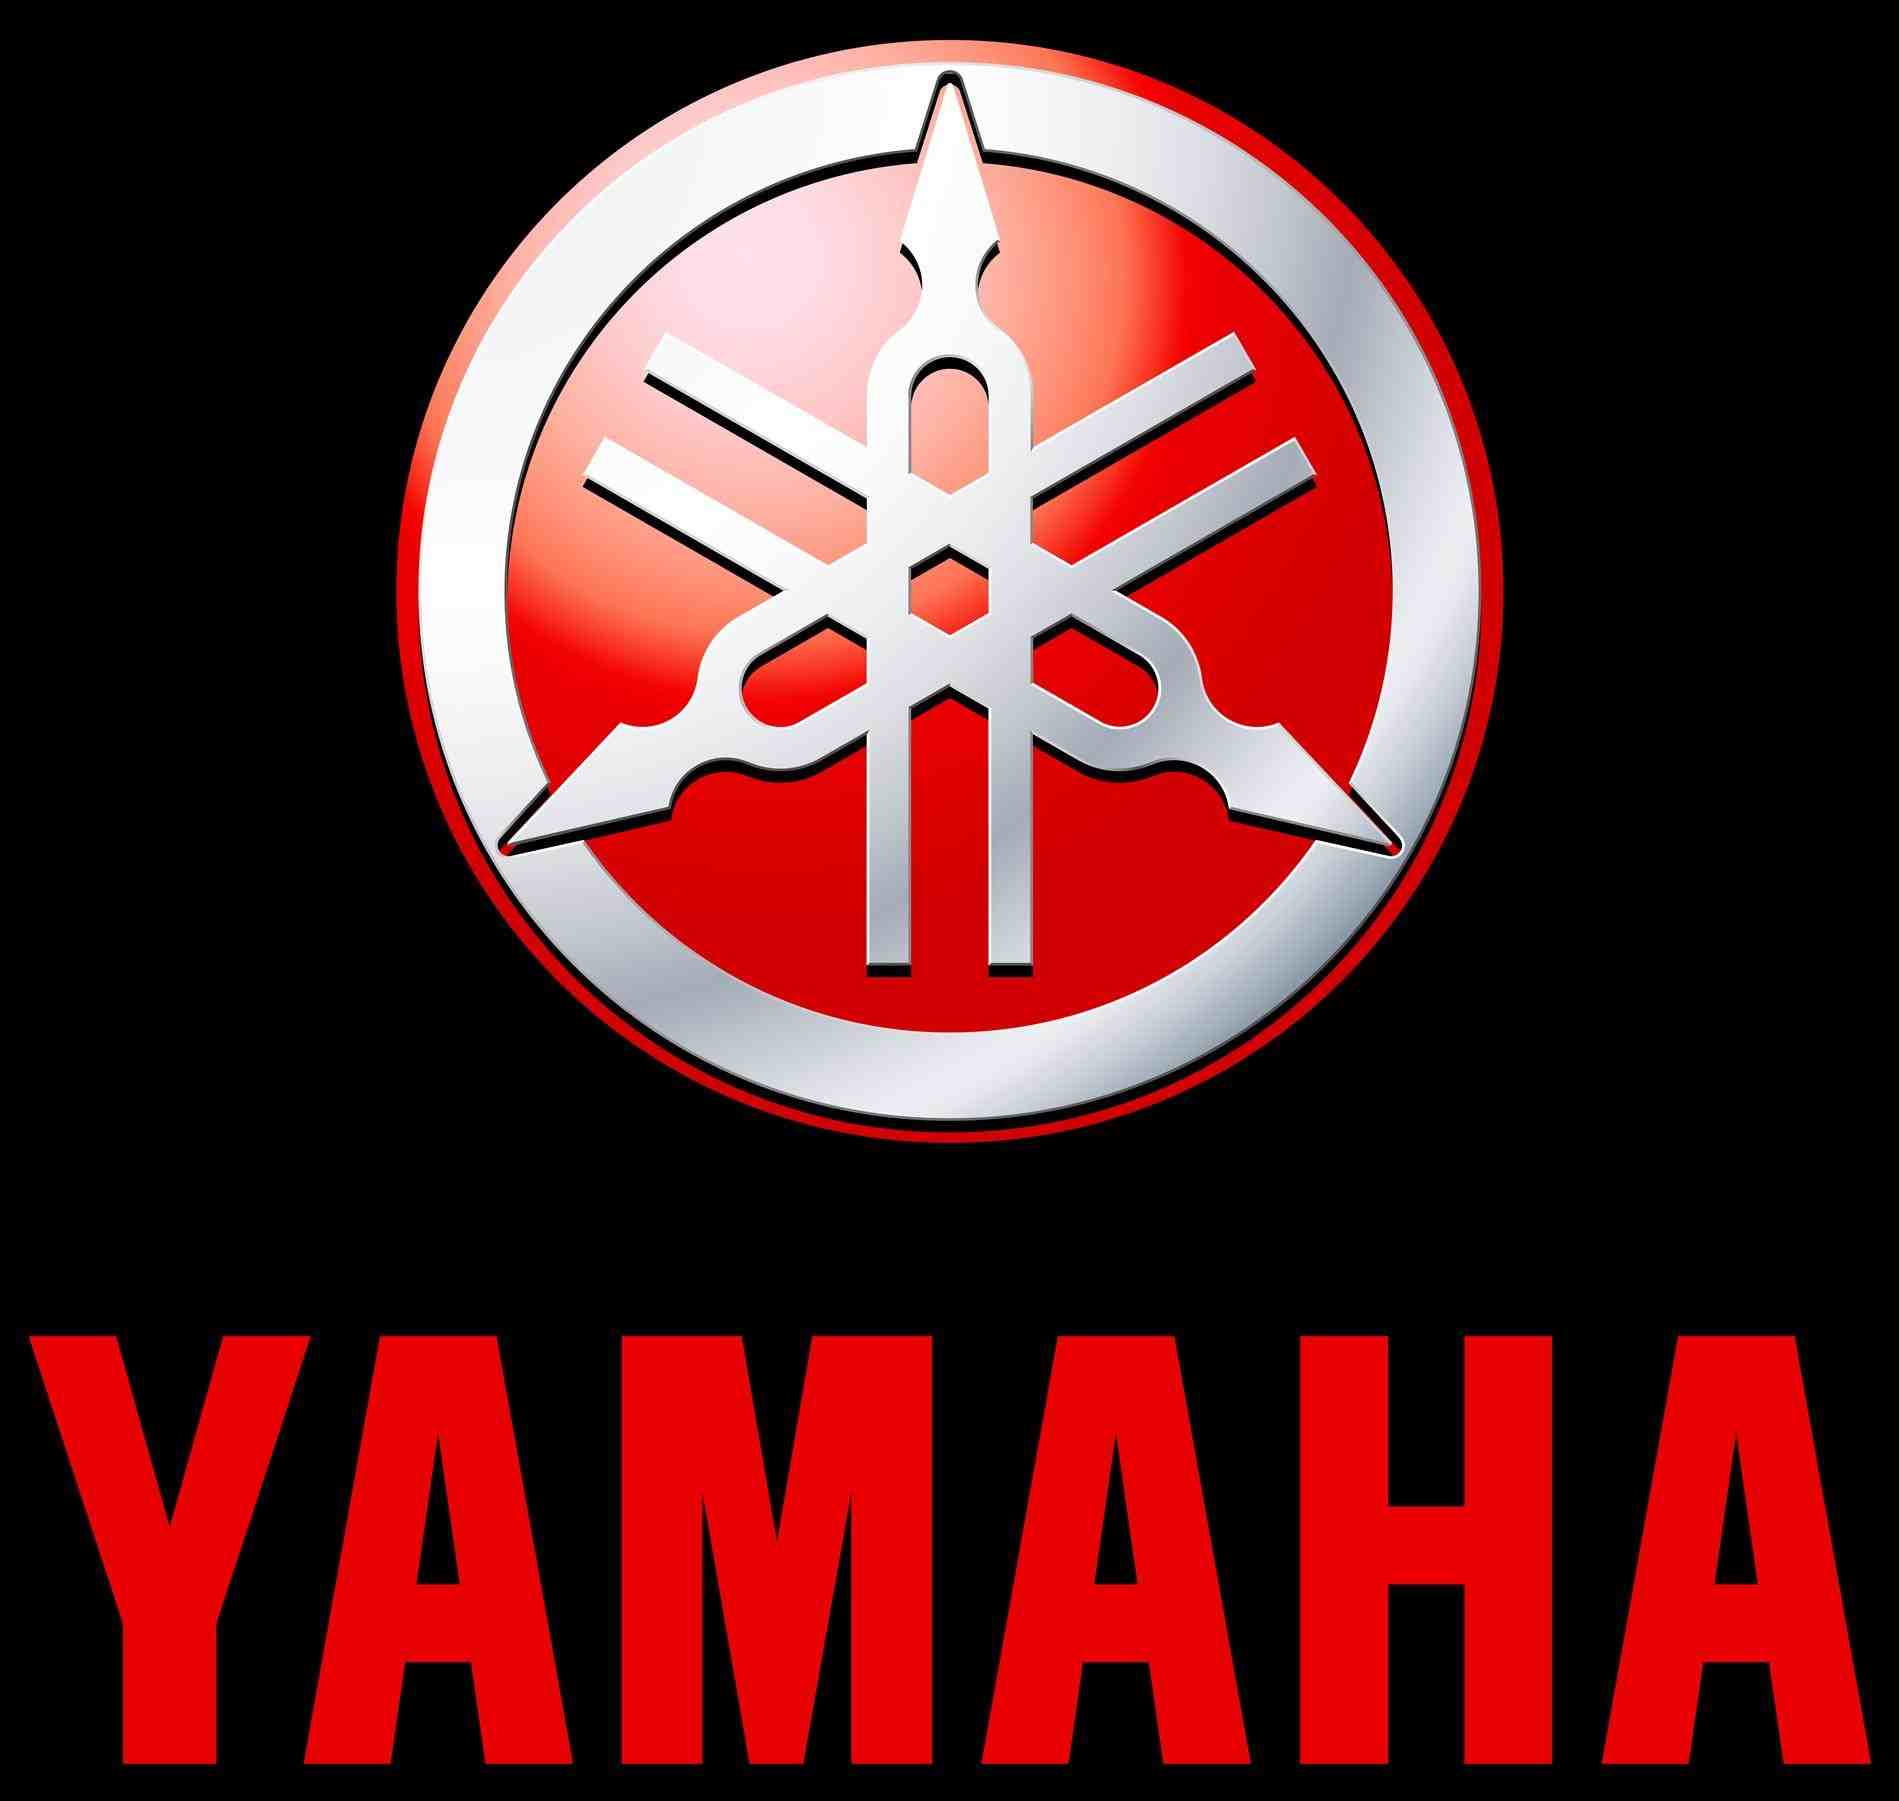 yamaha logo HD wallpaper Image Wallpaper 2018